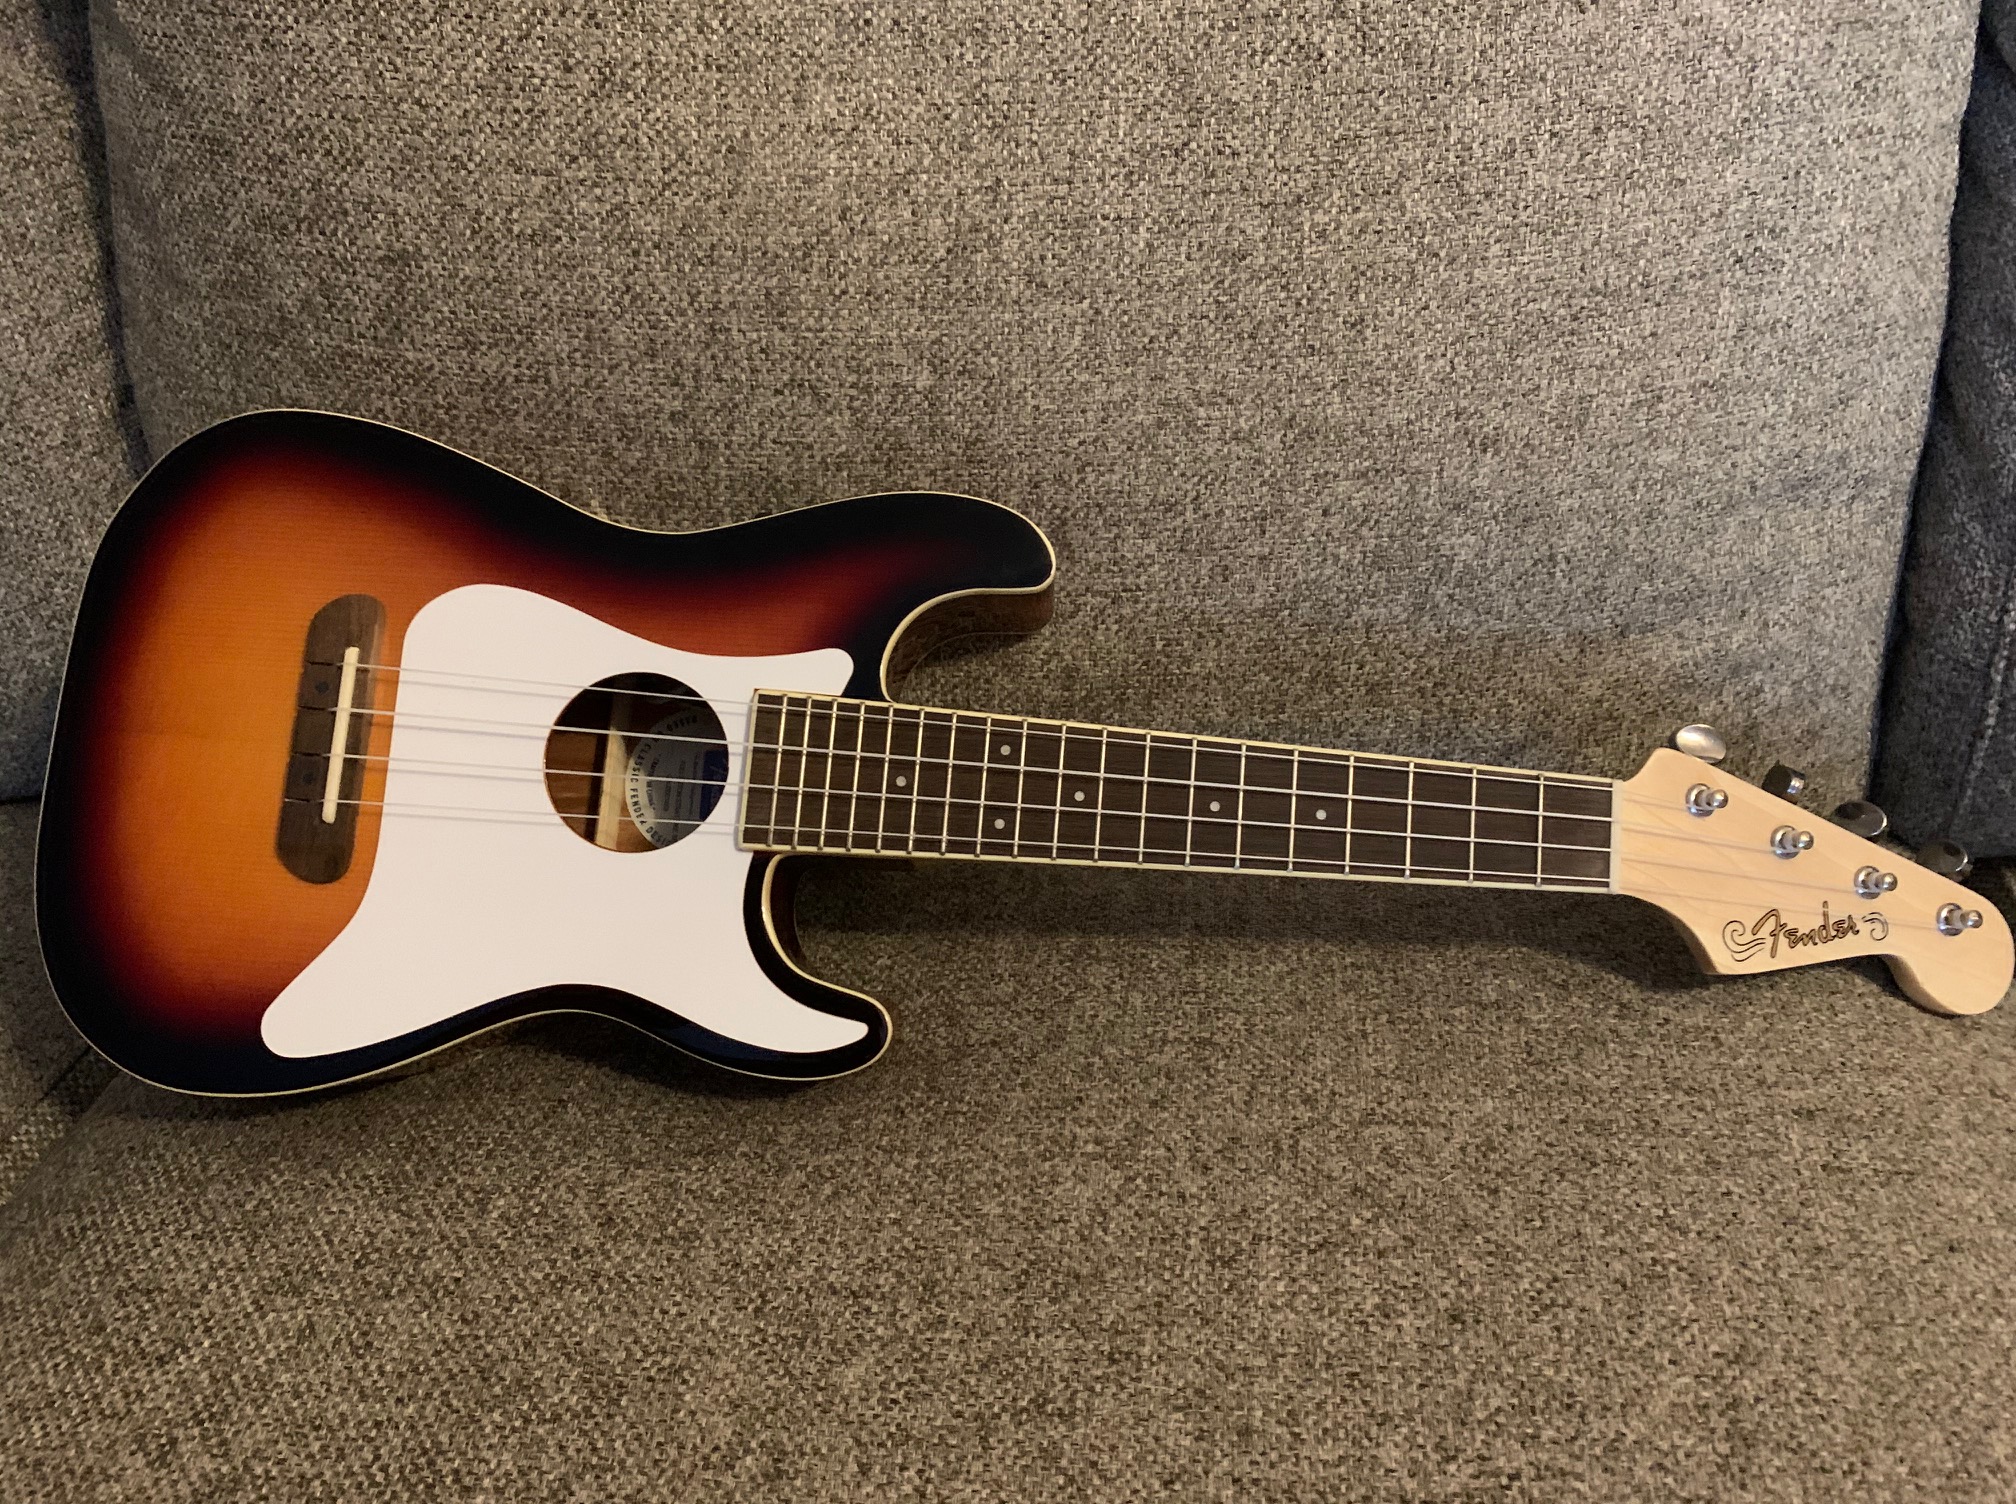 Fullerton Stratocaster ukulele - Gadgeteer